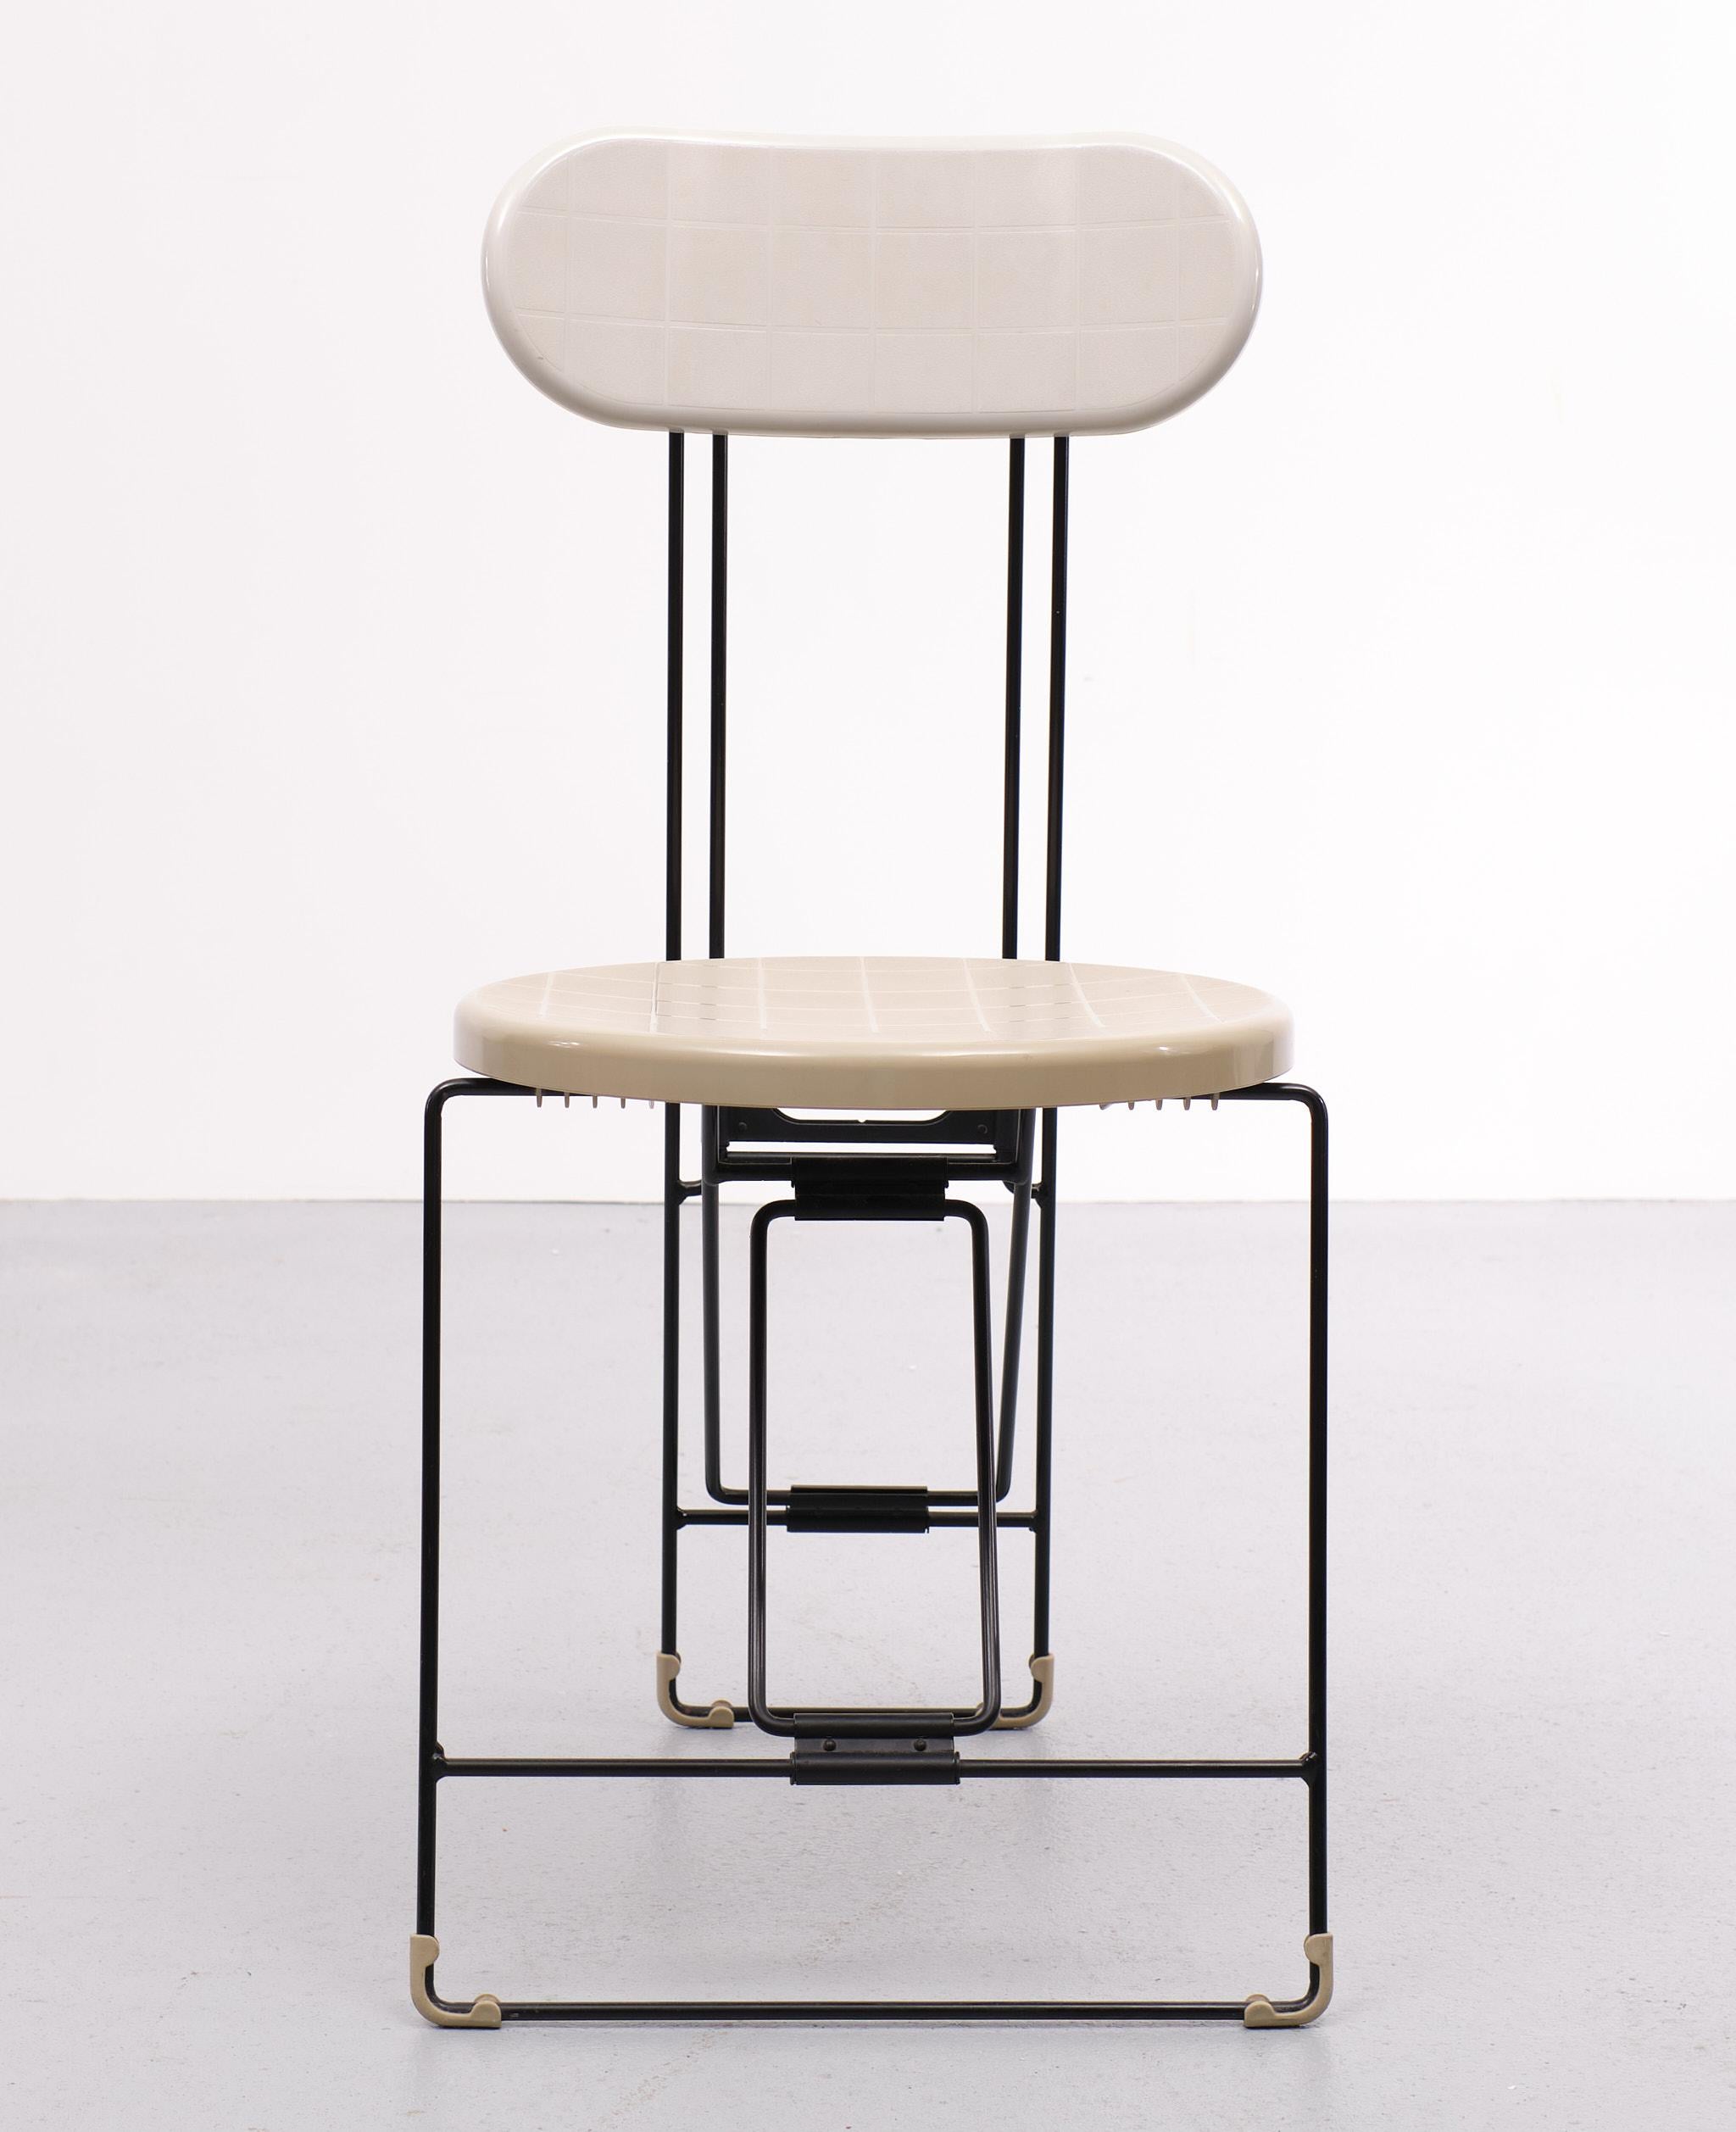 Italian Andries Van Onck Post Modern Folding Chair, 1984 For Sale